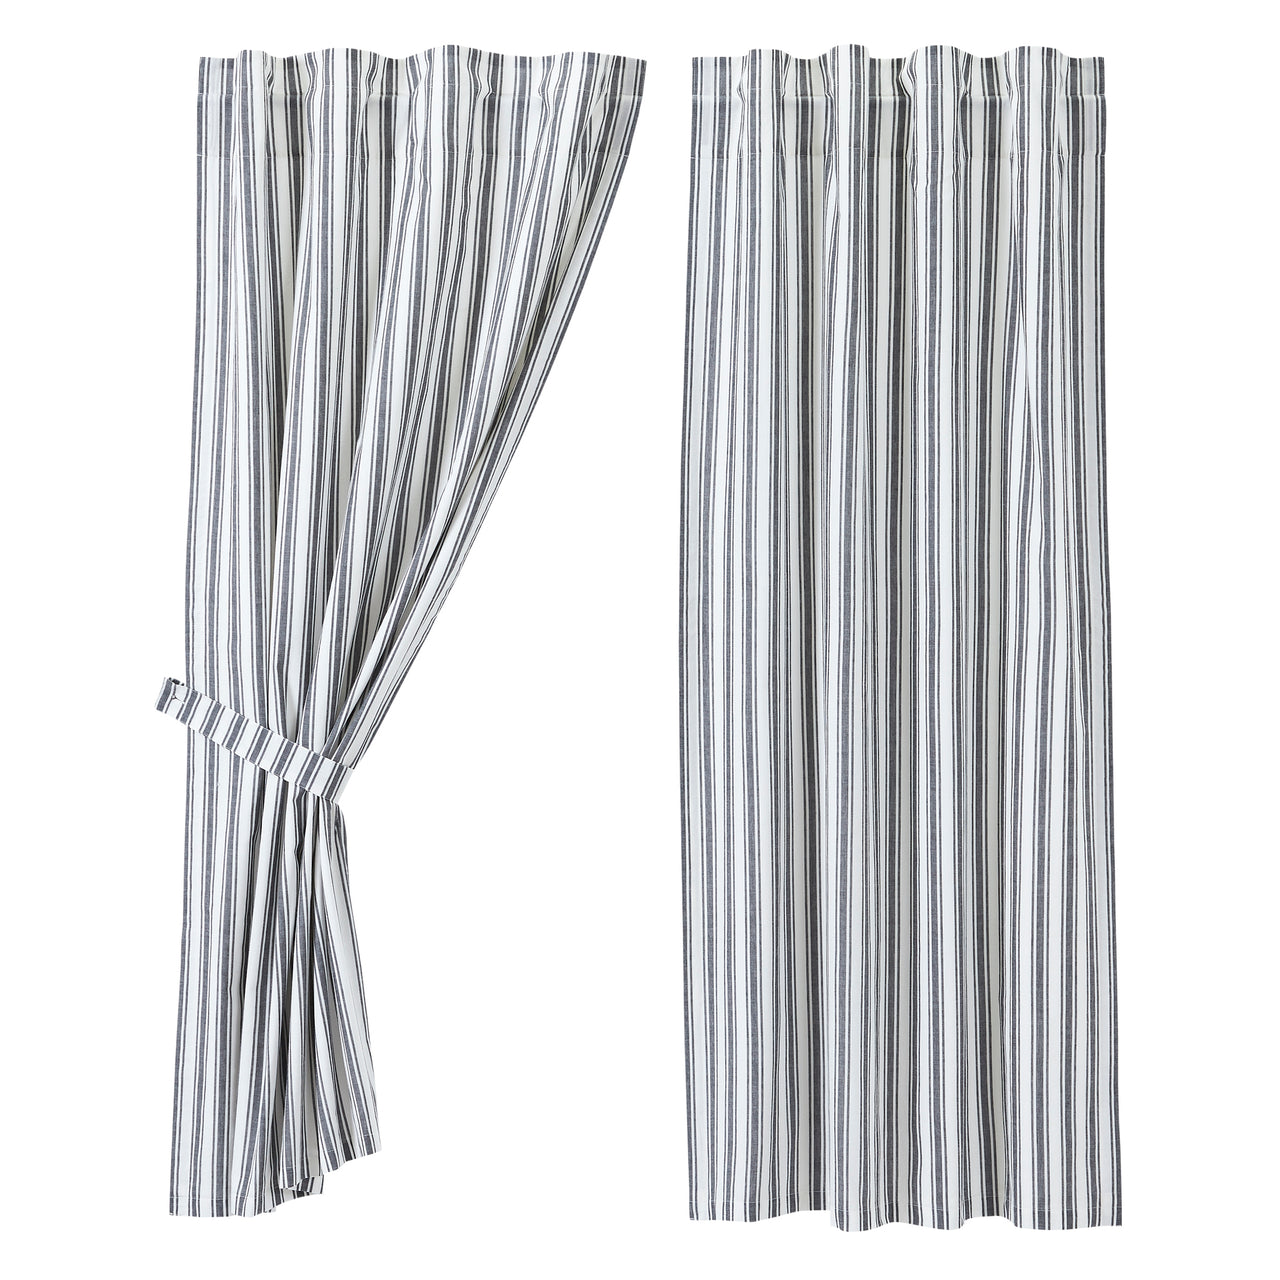 Sawyer Mill Black Ticking Stripe Short Curtain Panel Set of 2 63x36 VHC Brands